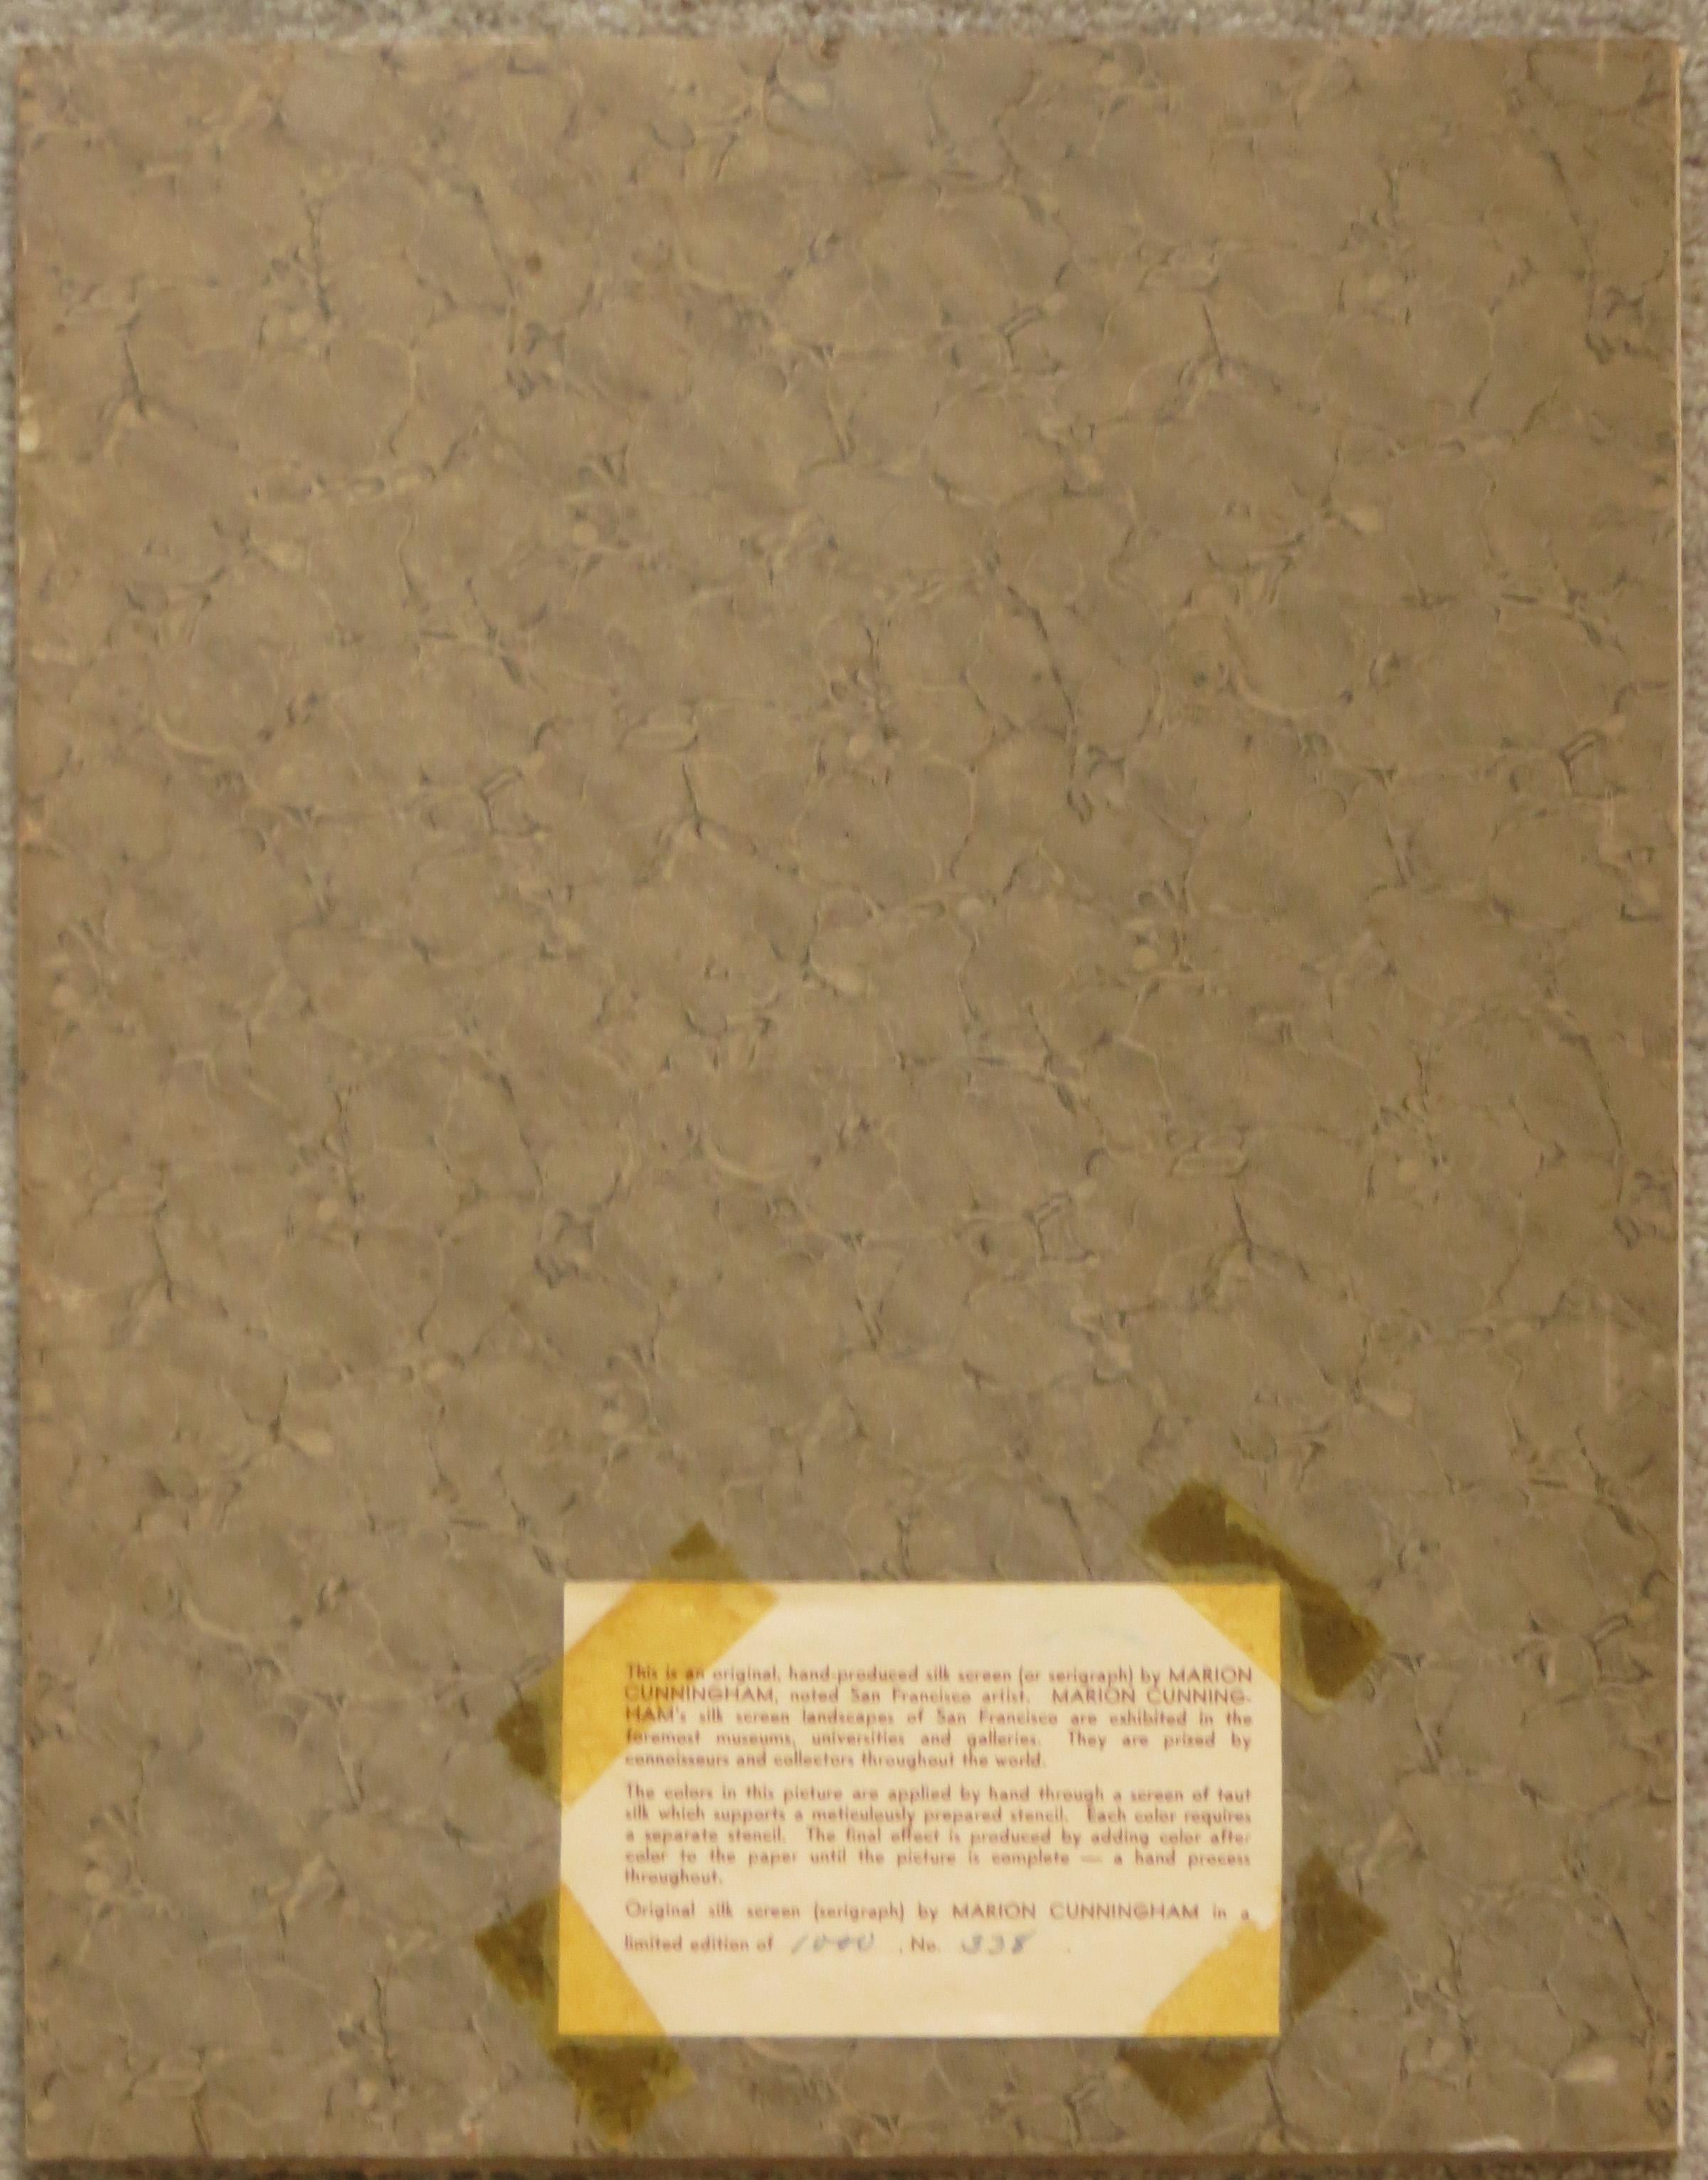 Artist: Marion Osborn Cunningham – American (1908-1948)
Title: Cable Car, San Francisco Bay Bridge, Blimp, Airplane
Year: circa 1943
Medium: Serigraph (Silkscreen)
Edition: 1000. This print: #338
Sight size: 8.25 x 6.25 inches. 
Framed size: 15 x 12